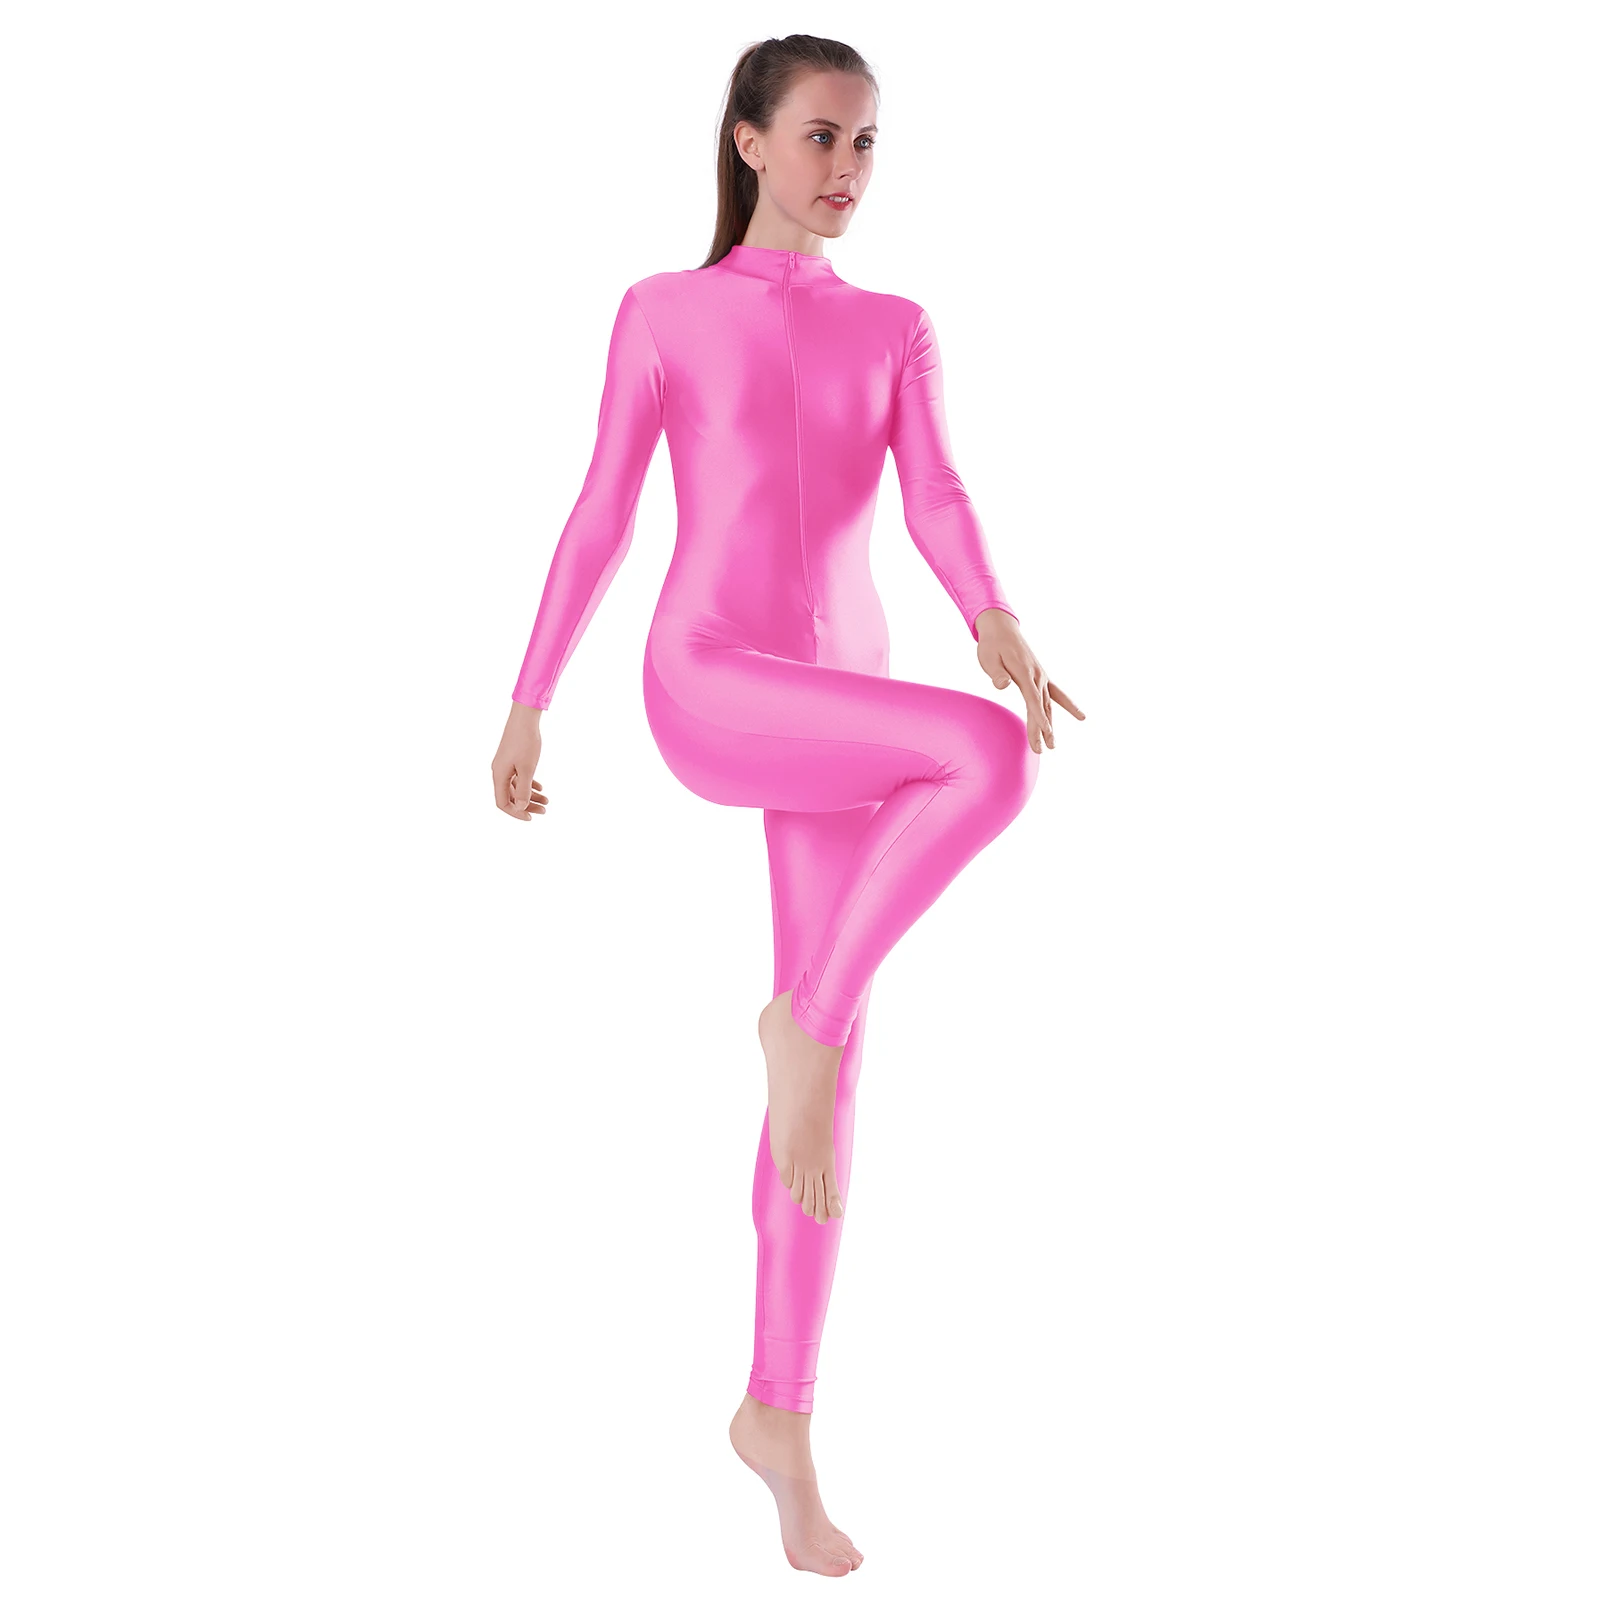 

AOYLISEY Adult Dance Long Sleeve Unitard for Women Spandex Jumpsuits Suit One Piece Turtleneck gymnastic unitards Men Dance Wear